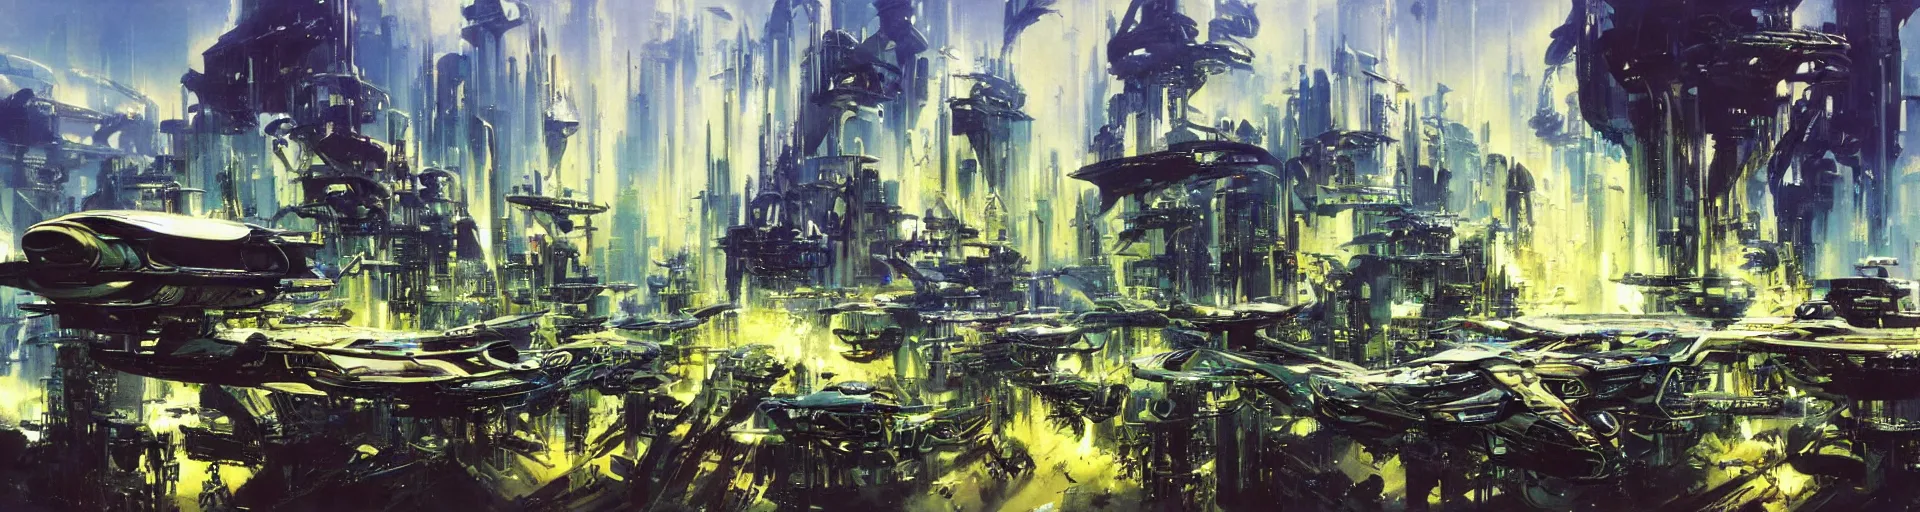 Prompt: a futuristic civilisation by john berkey